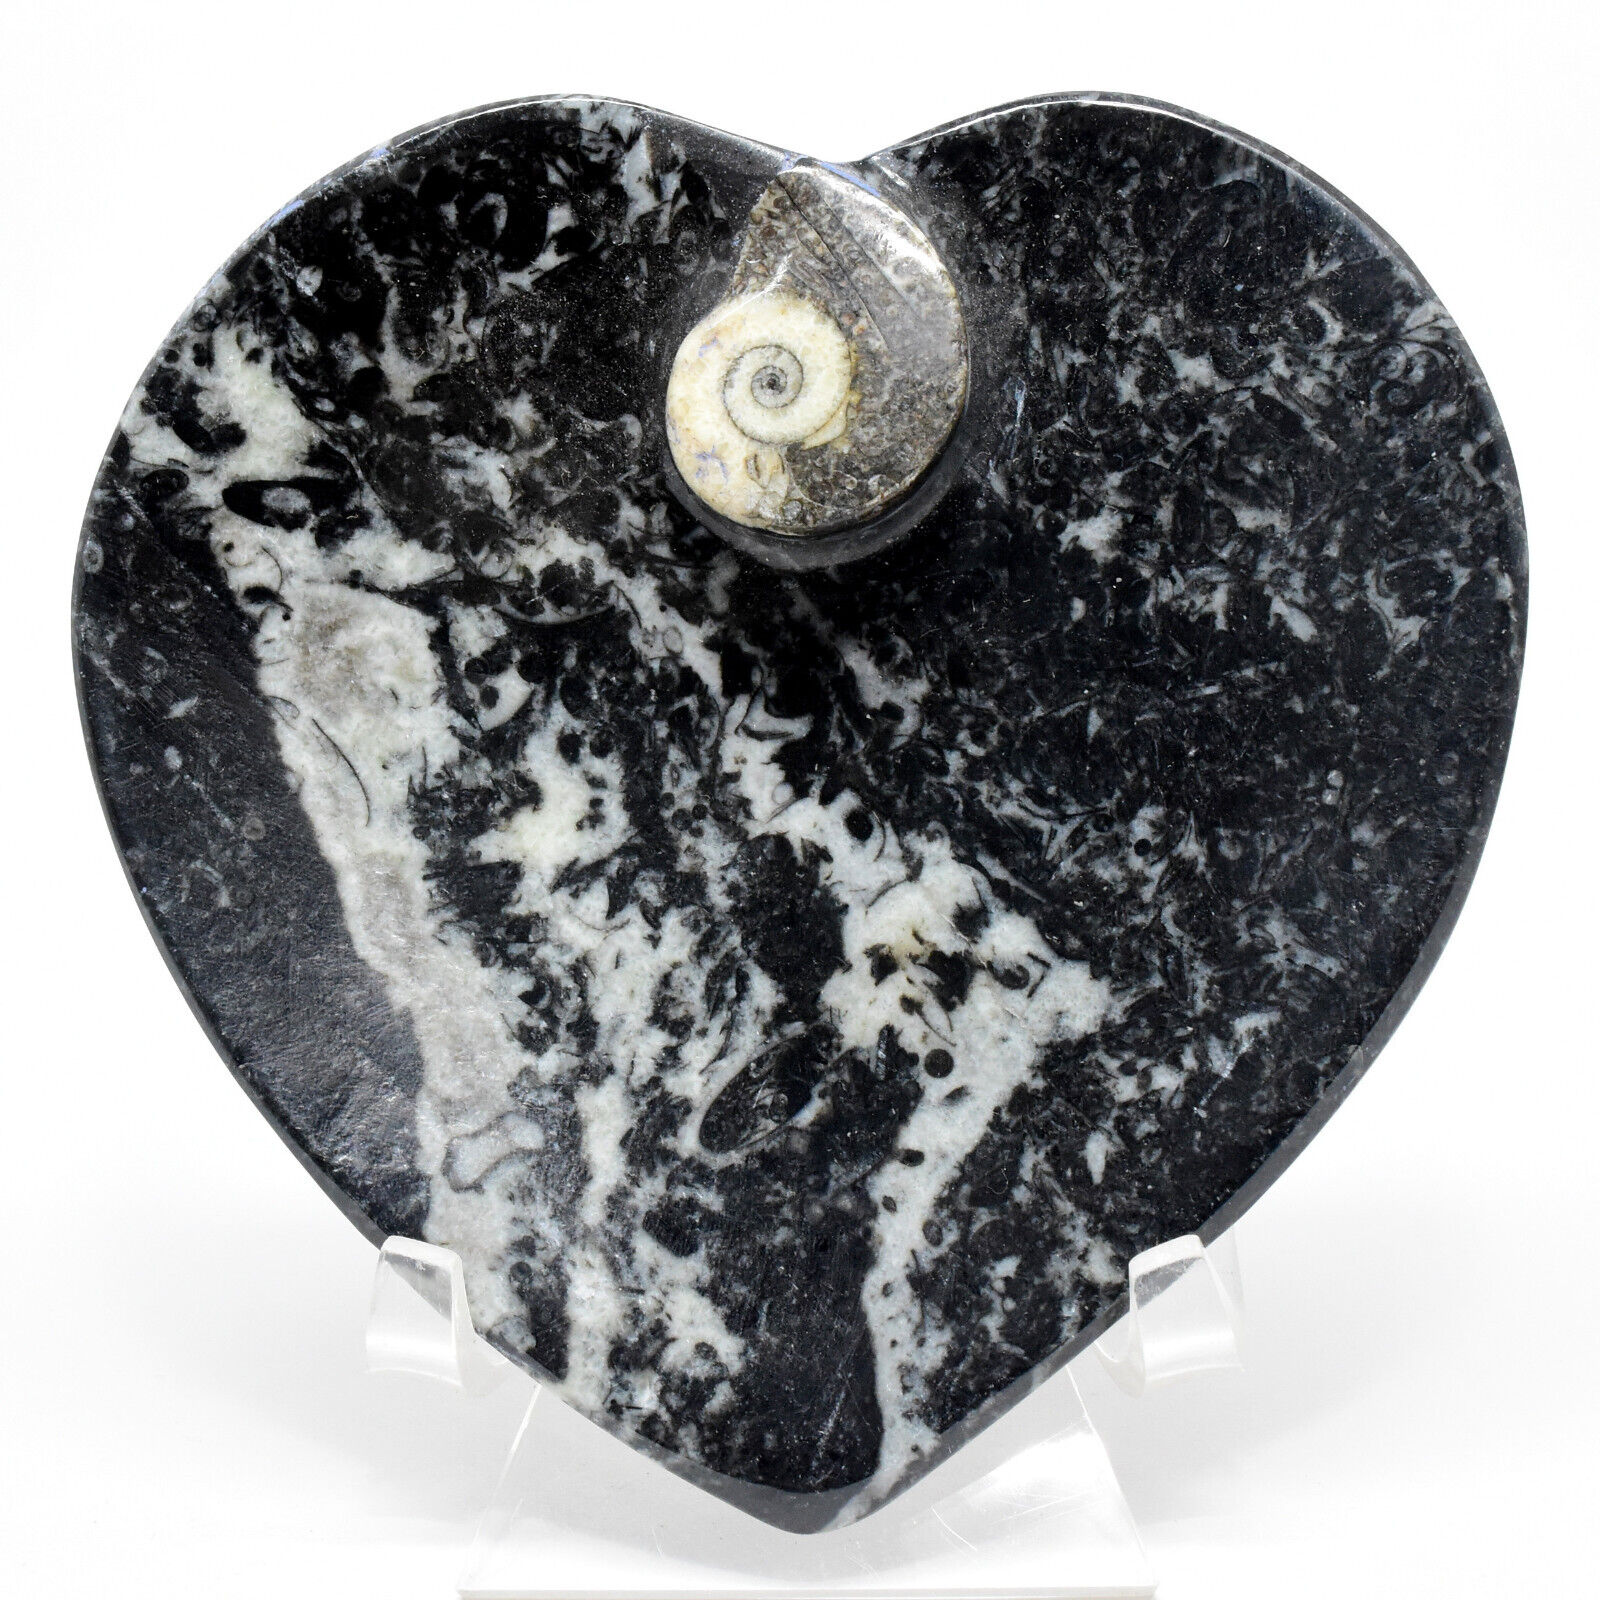 170g Orthoceras Bowl Ammonite Heart-Shaped Fossil Seashell Mineral Dish Morocco